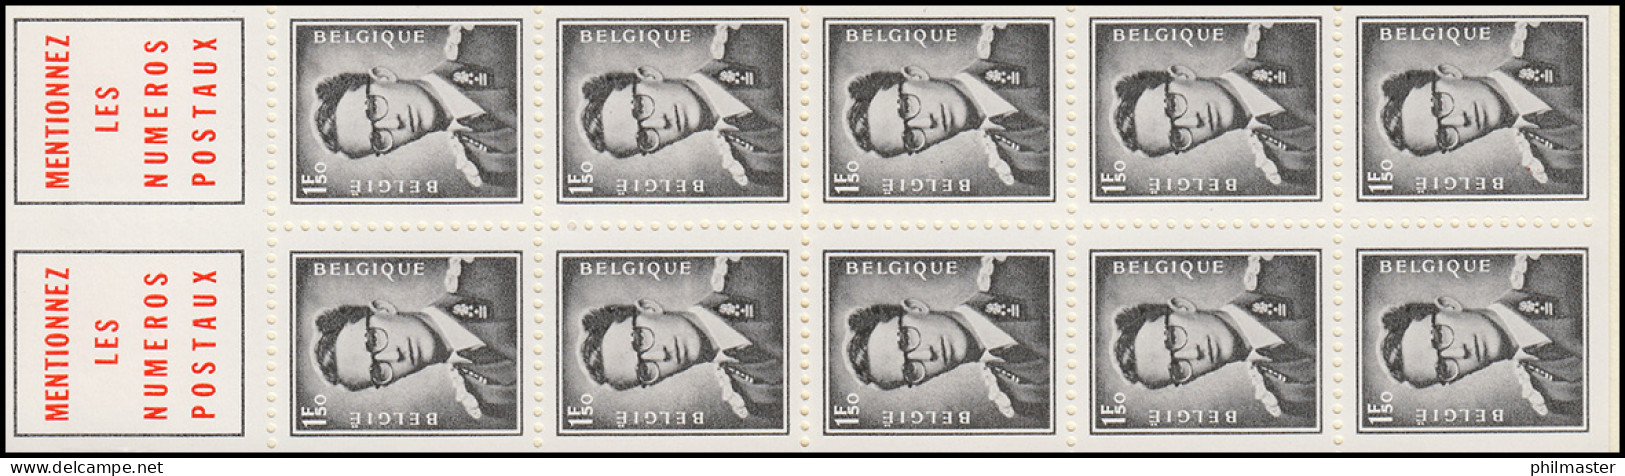 Belgien-Markenheftchen 1621x König Baudouin 1970, ** - Unclassified